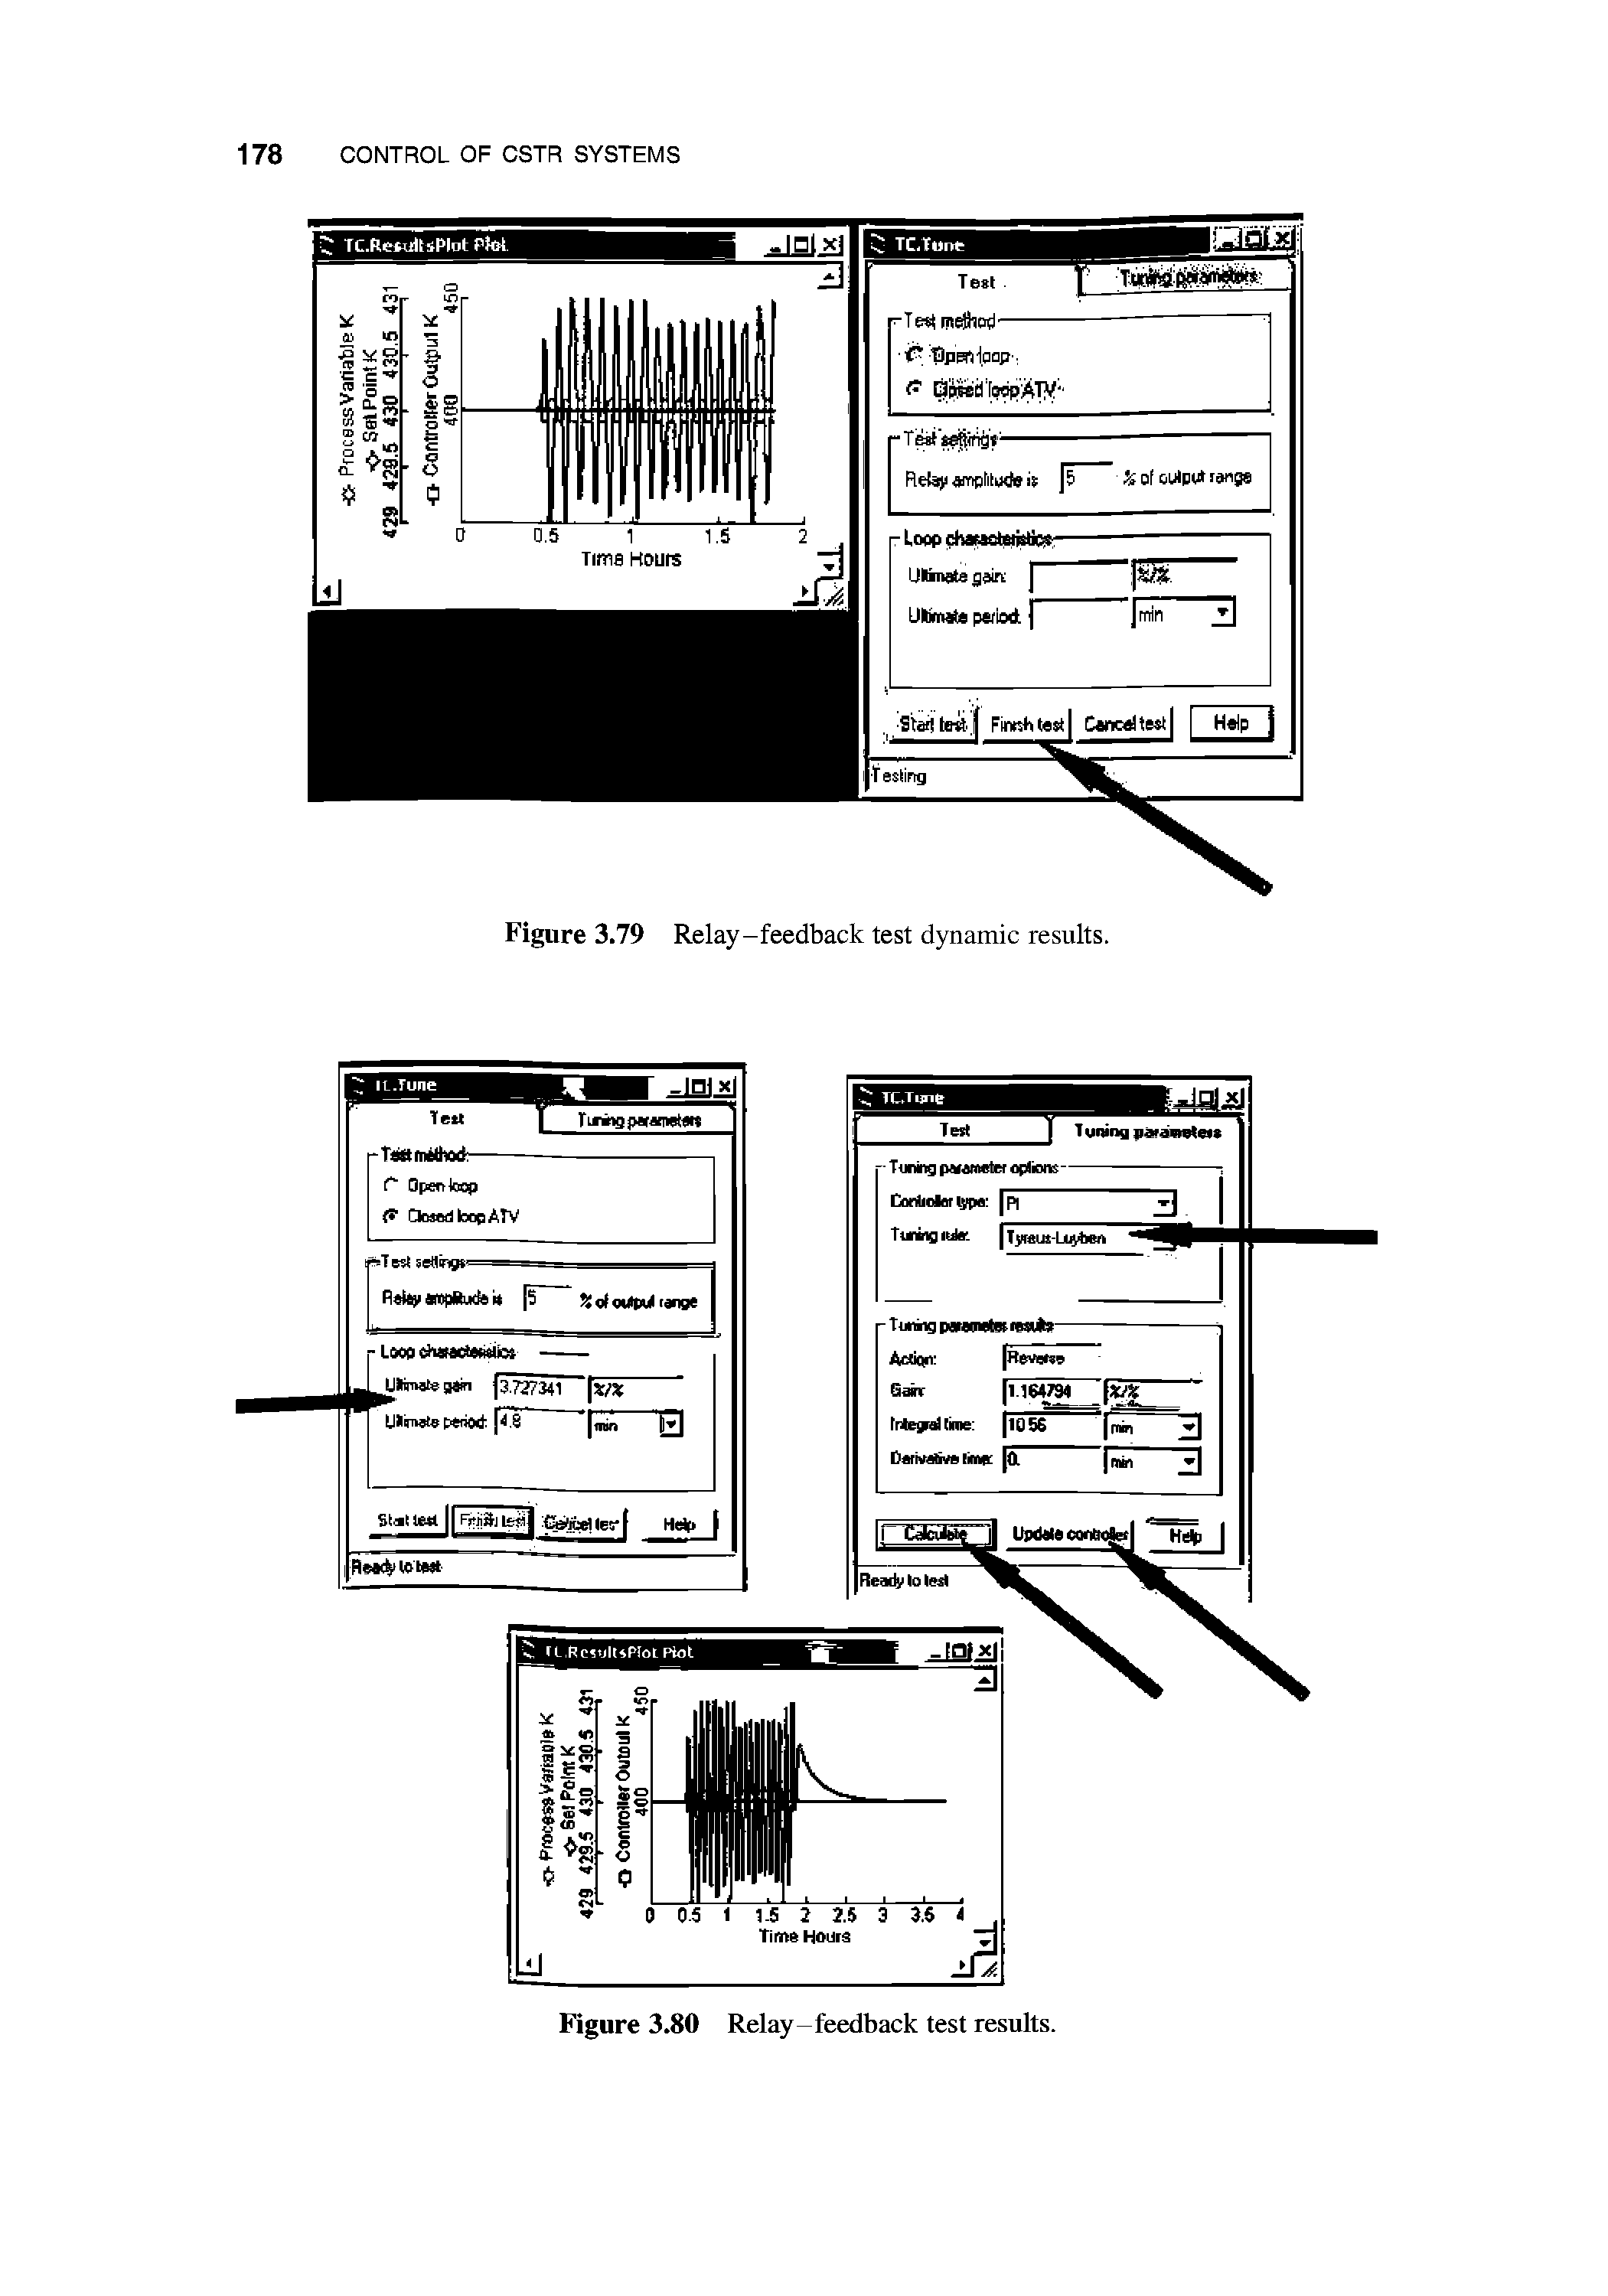 Figure 3.79 Relay-feedback test dynamic results.